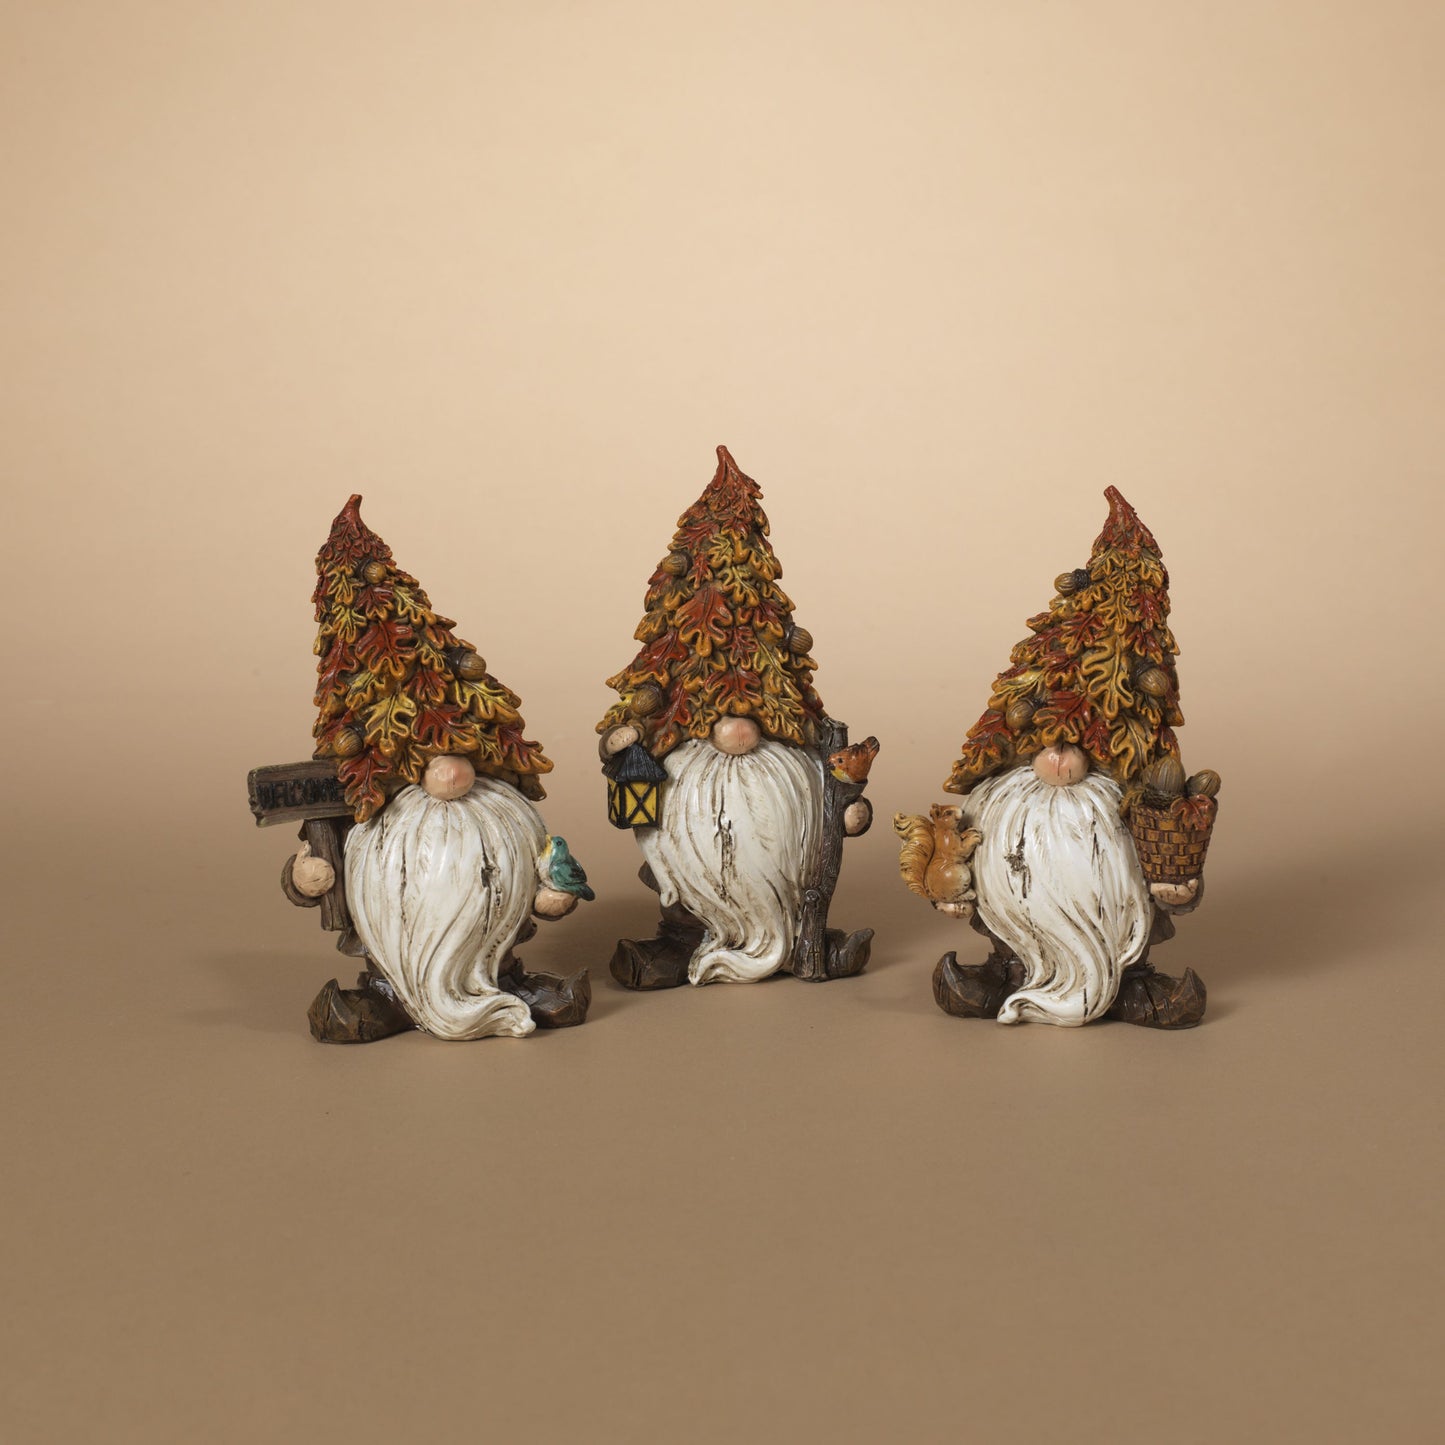 Gerson Company 9.45"H Resin Harvest Gnome Figurine, 3 Asst